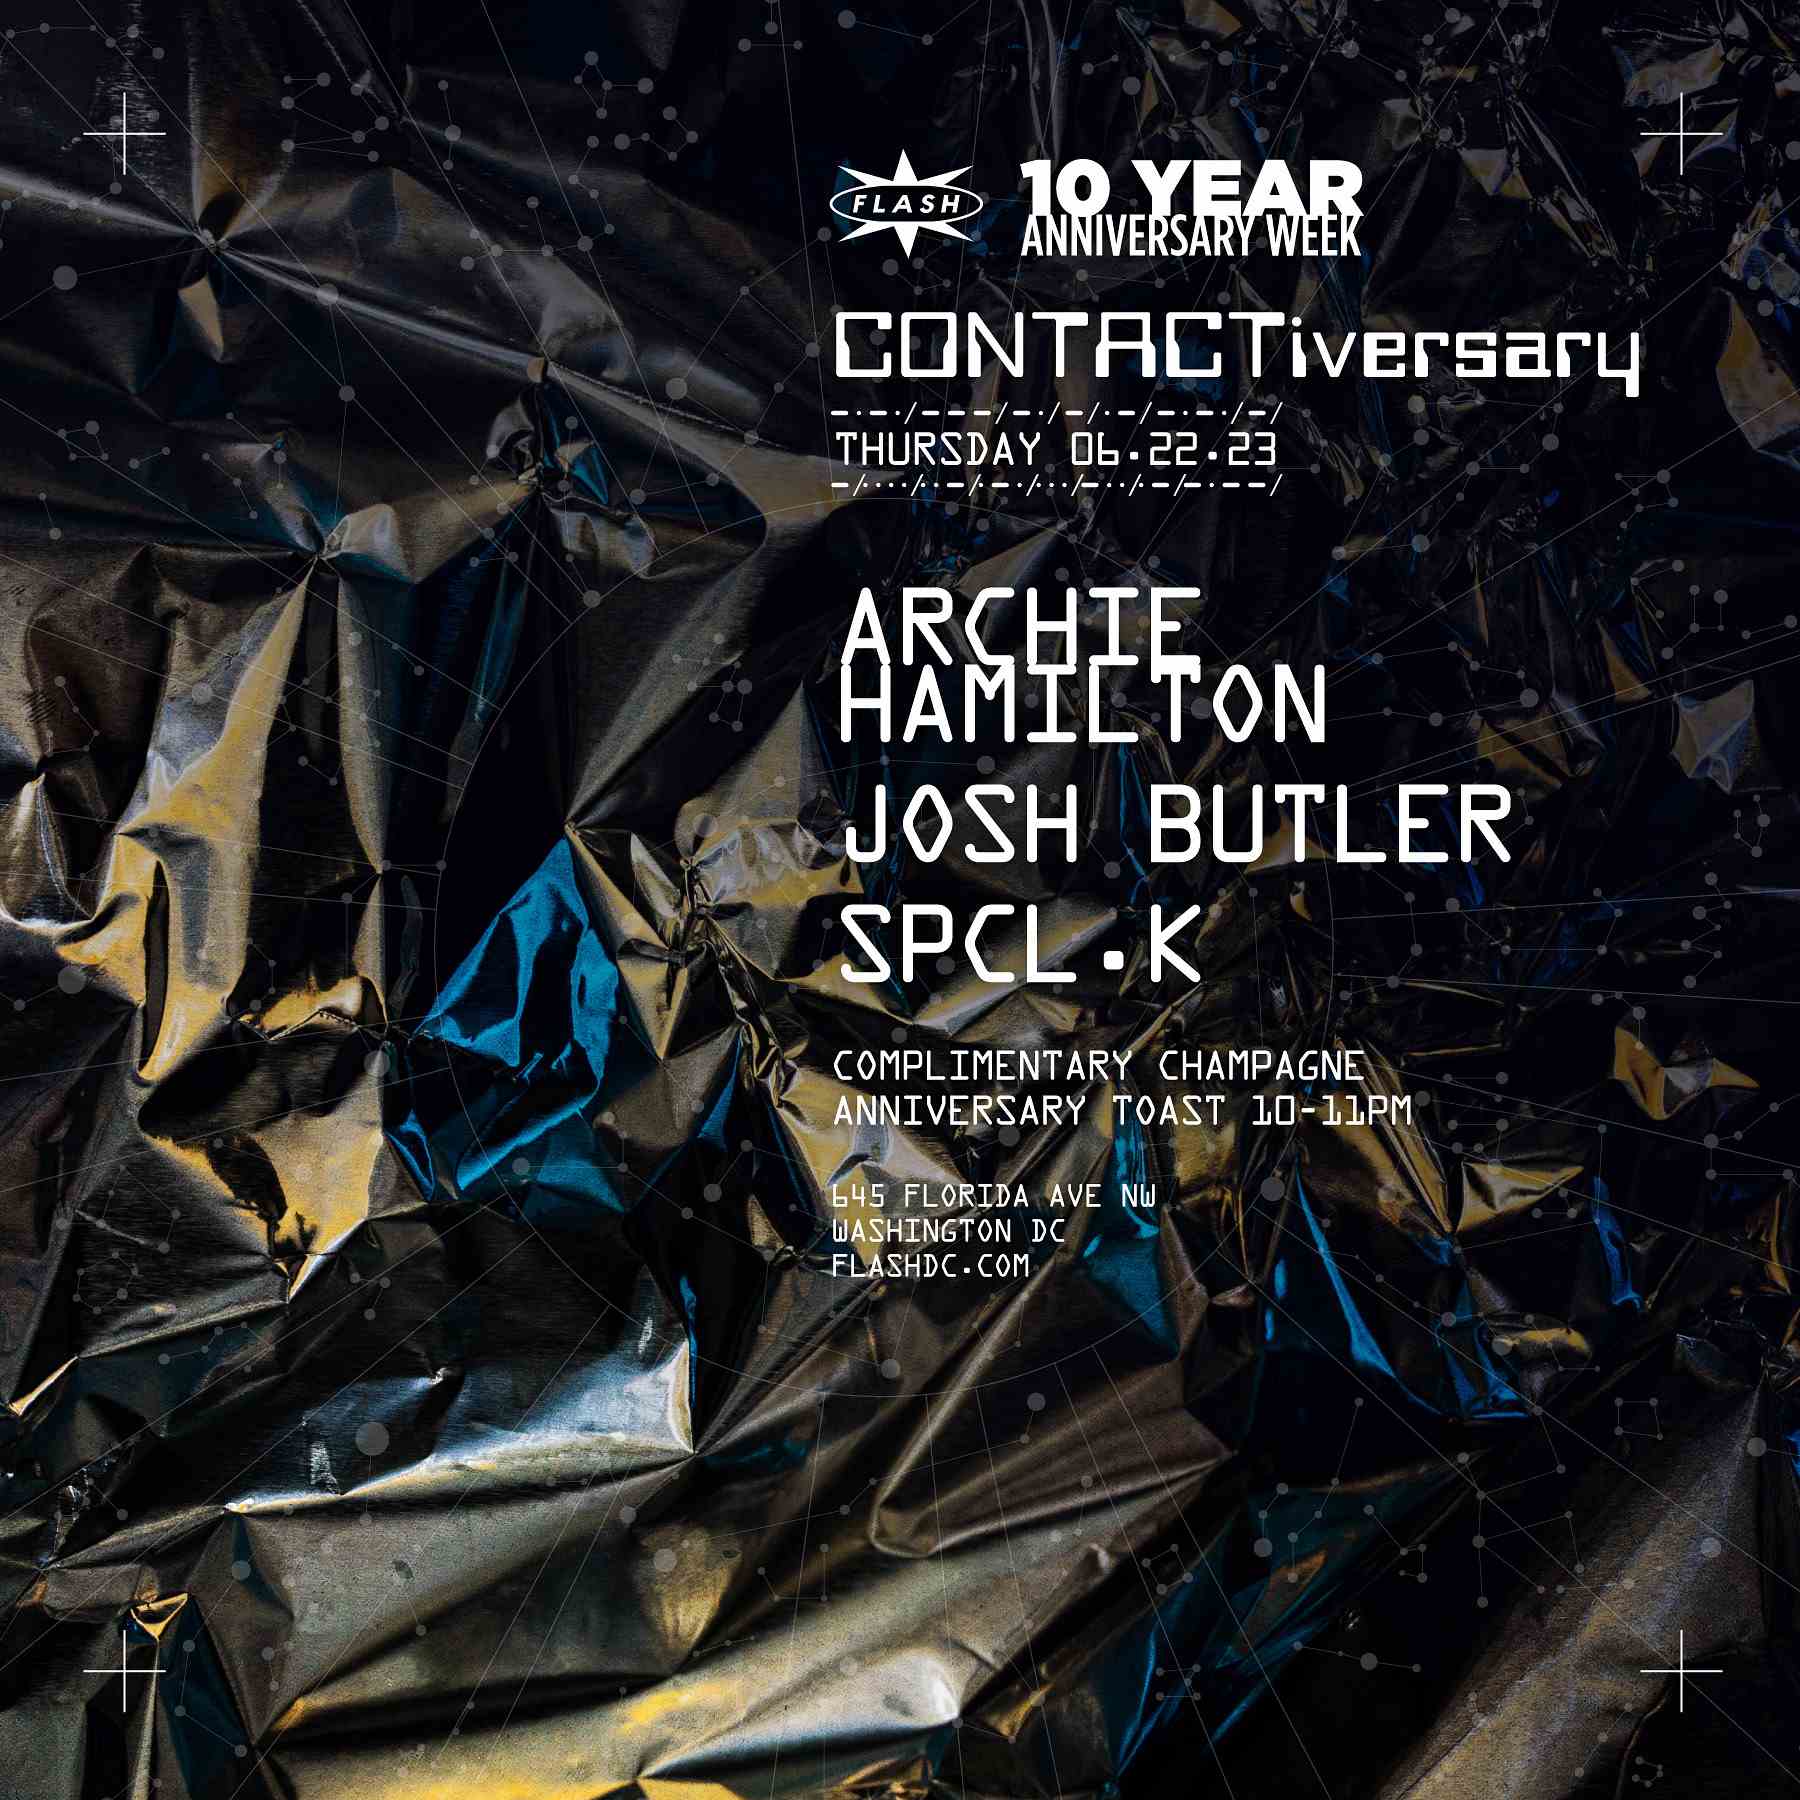 Event image for CONTACTiversary: Archie Hamilton - Josh Butler - SPCL. K